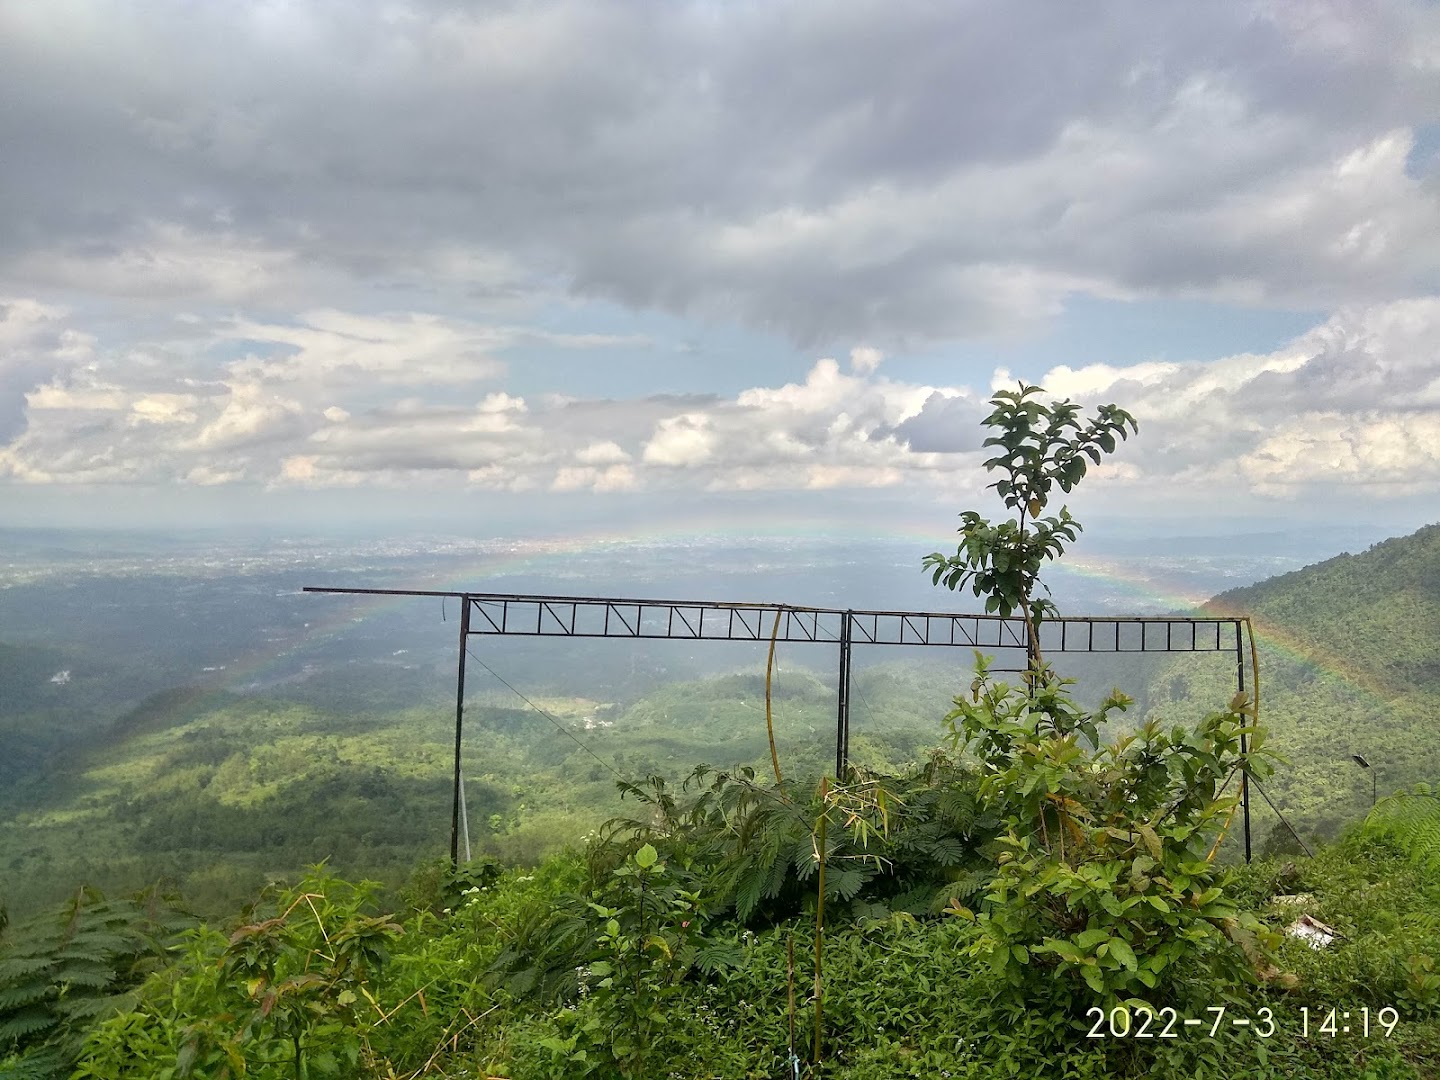 Kawasan Wisata Gunung Galunggung Photo